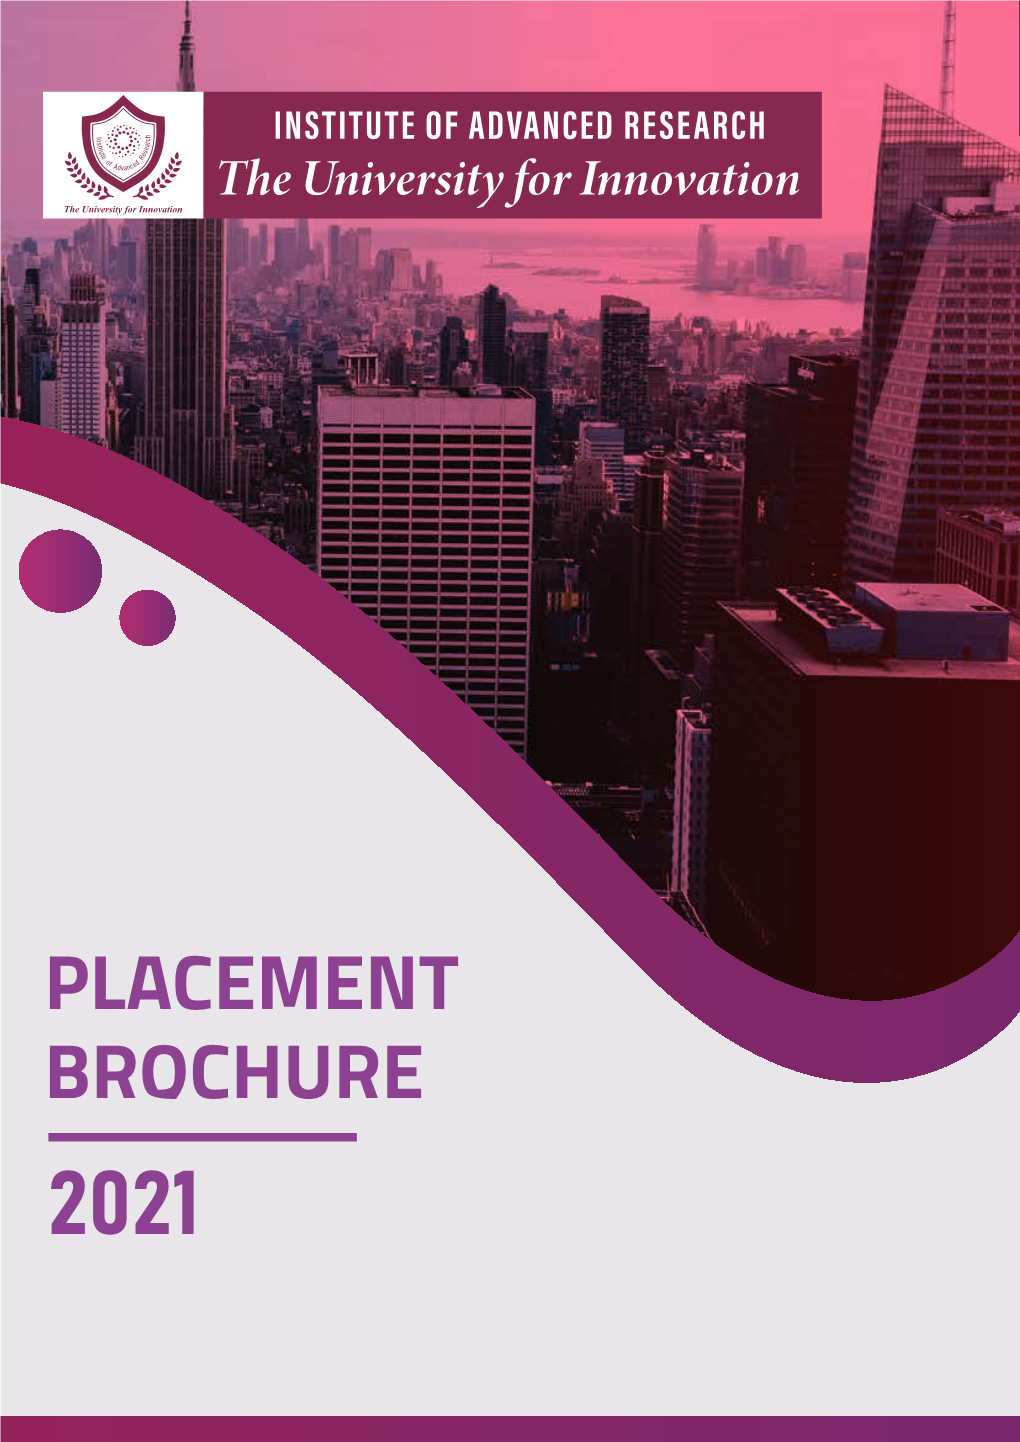 PLACEMENT BROCHURE 2021 About University